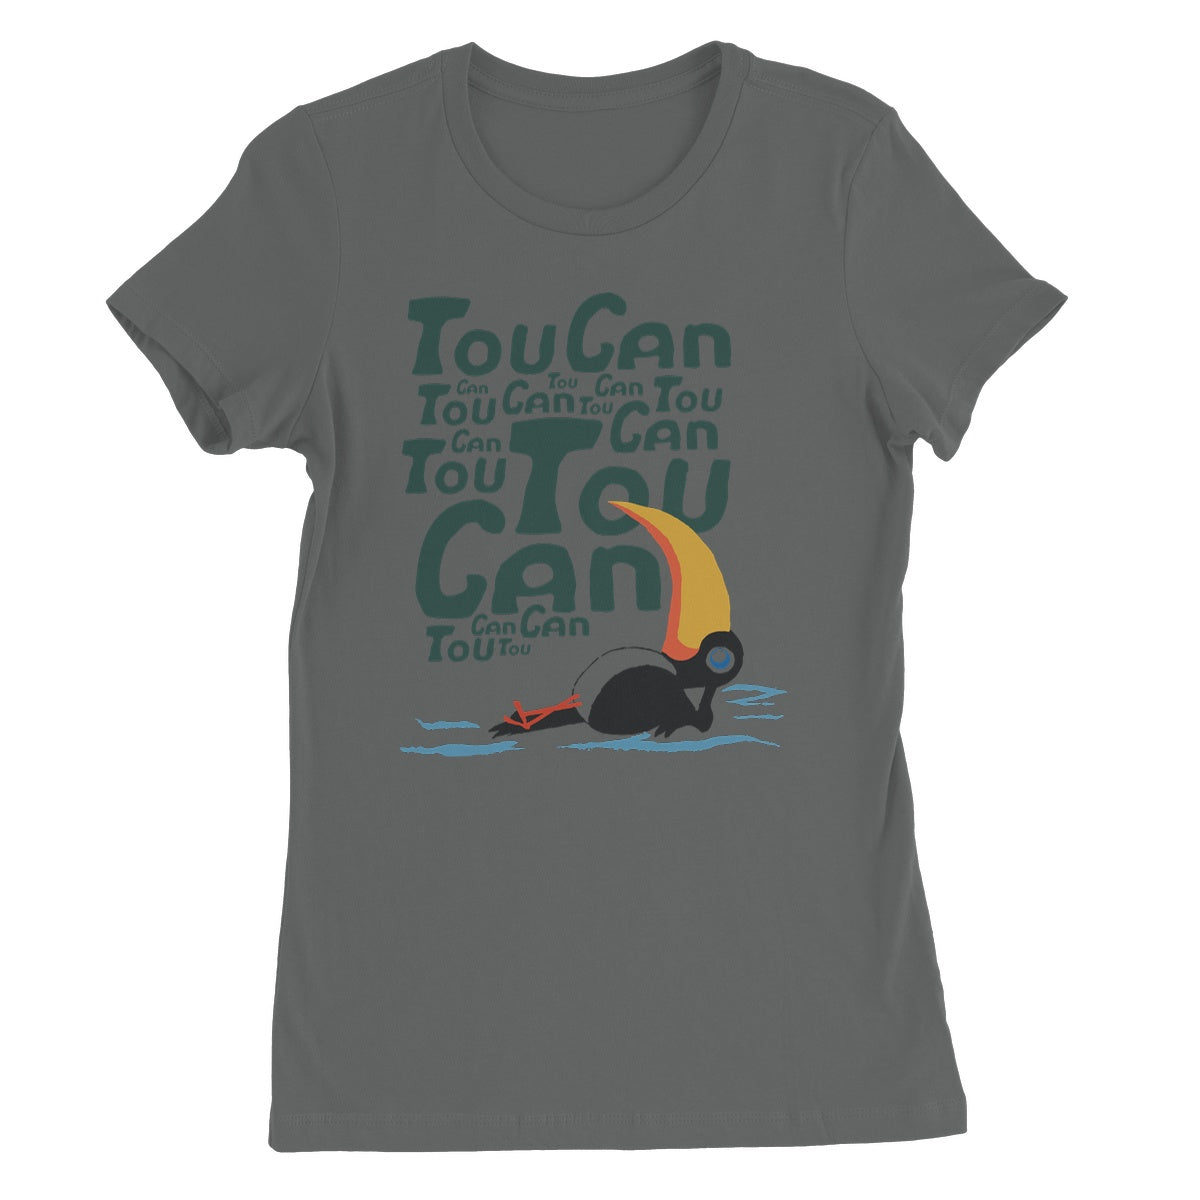 AQUA HMP2 - 09 - Tucano - Camiseta feminina de jérsei fino